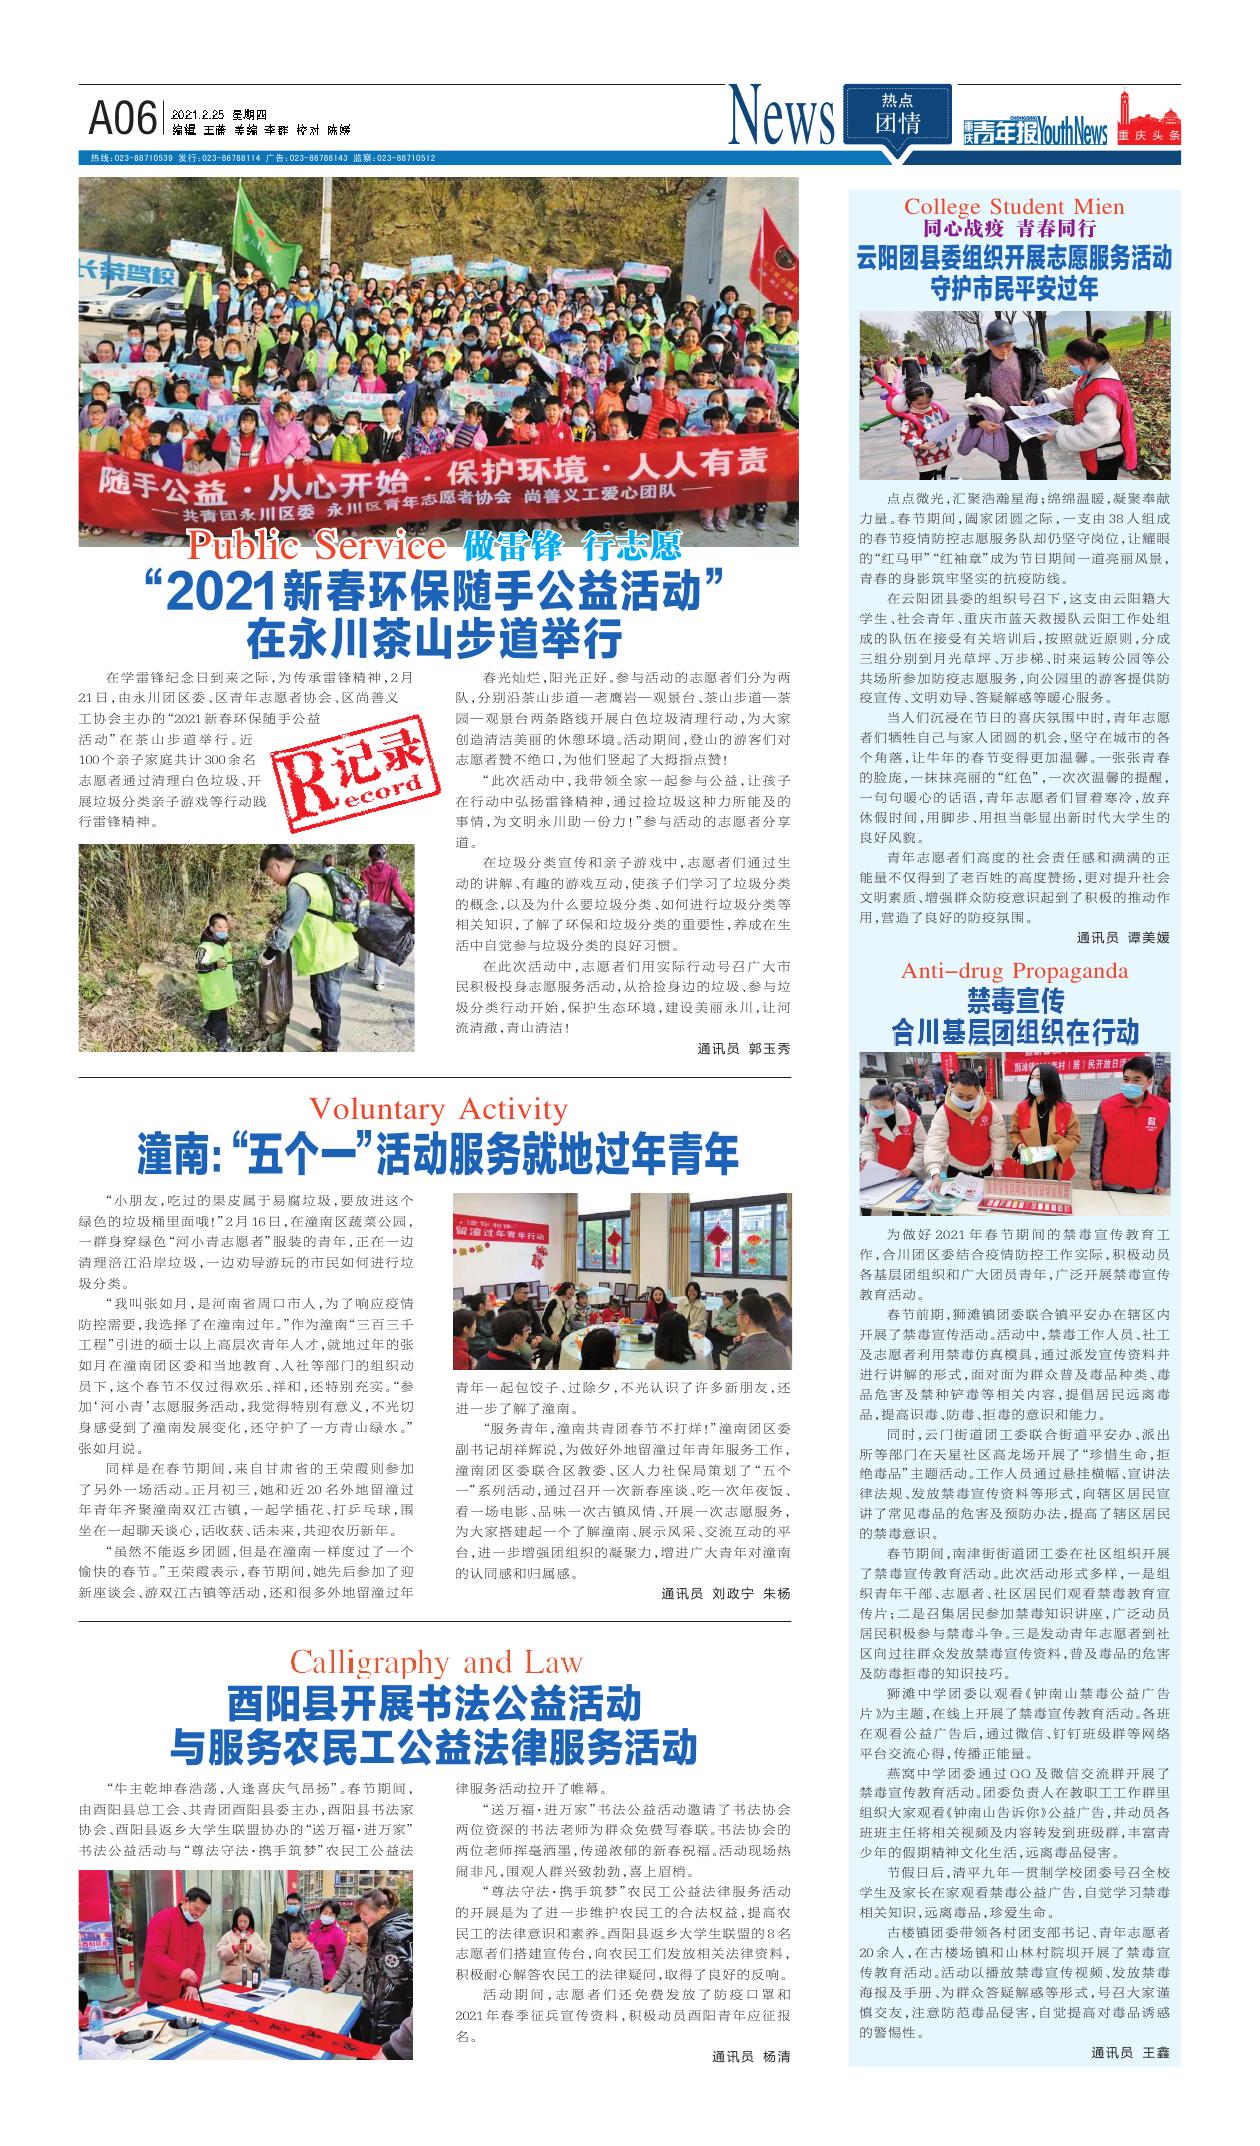 A06-做雷锋 行志愿“2021新春环保随手公益活动” 在永川茶山步道举行